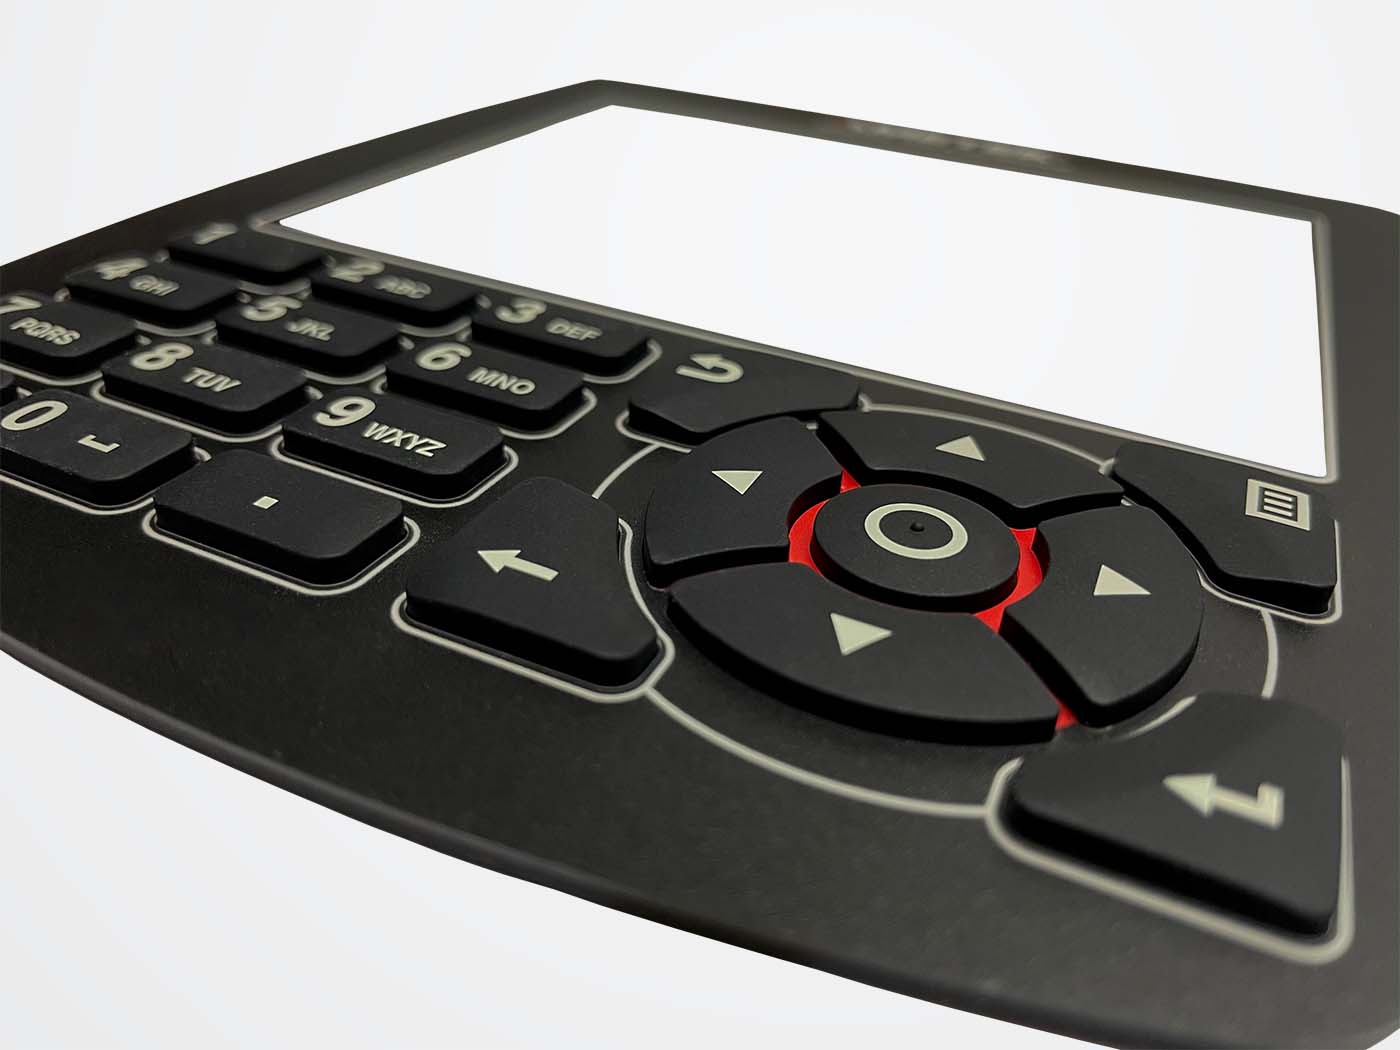 Veraangenamen dempen Vervolg Silicone keyboard | Nice touch and durable control panel